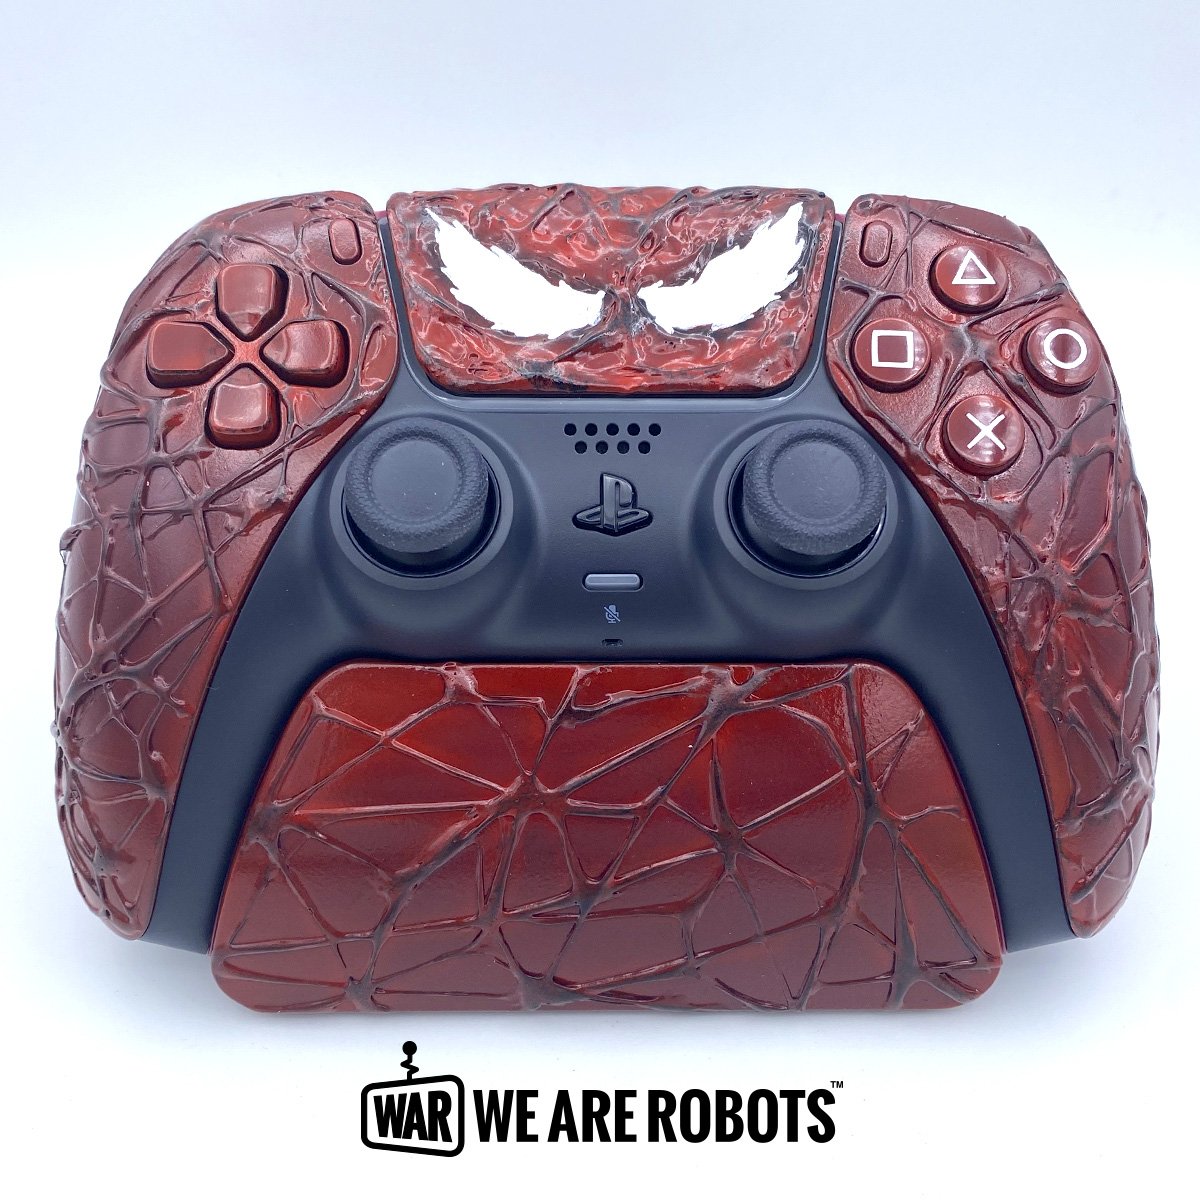 We Are Robots - Venom - PS5 Controller